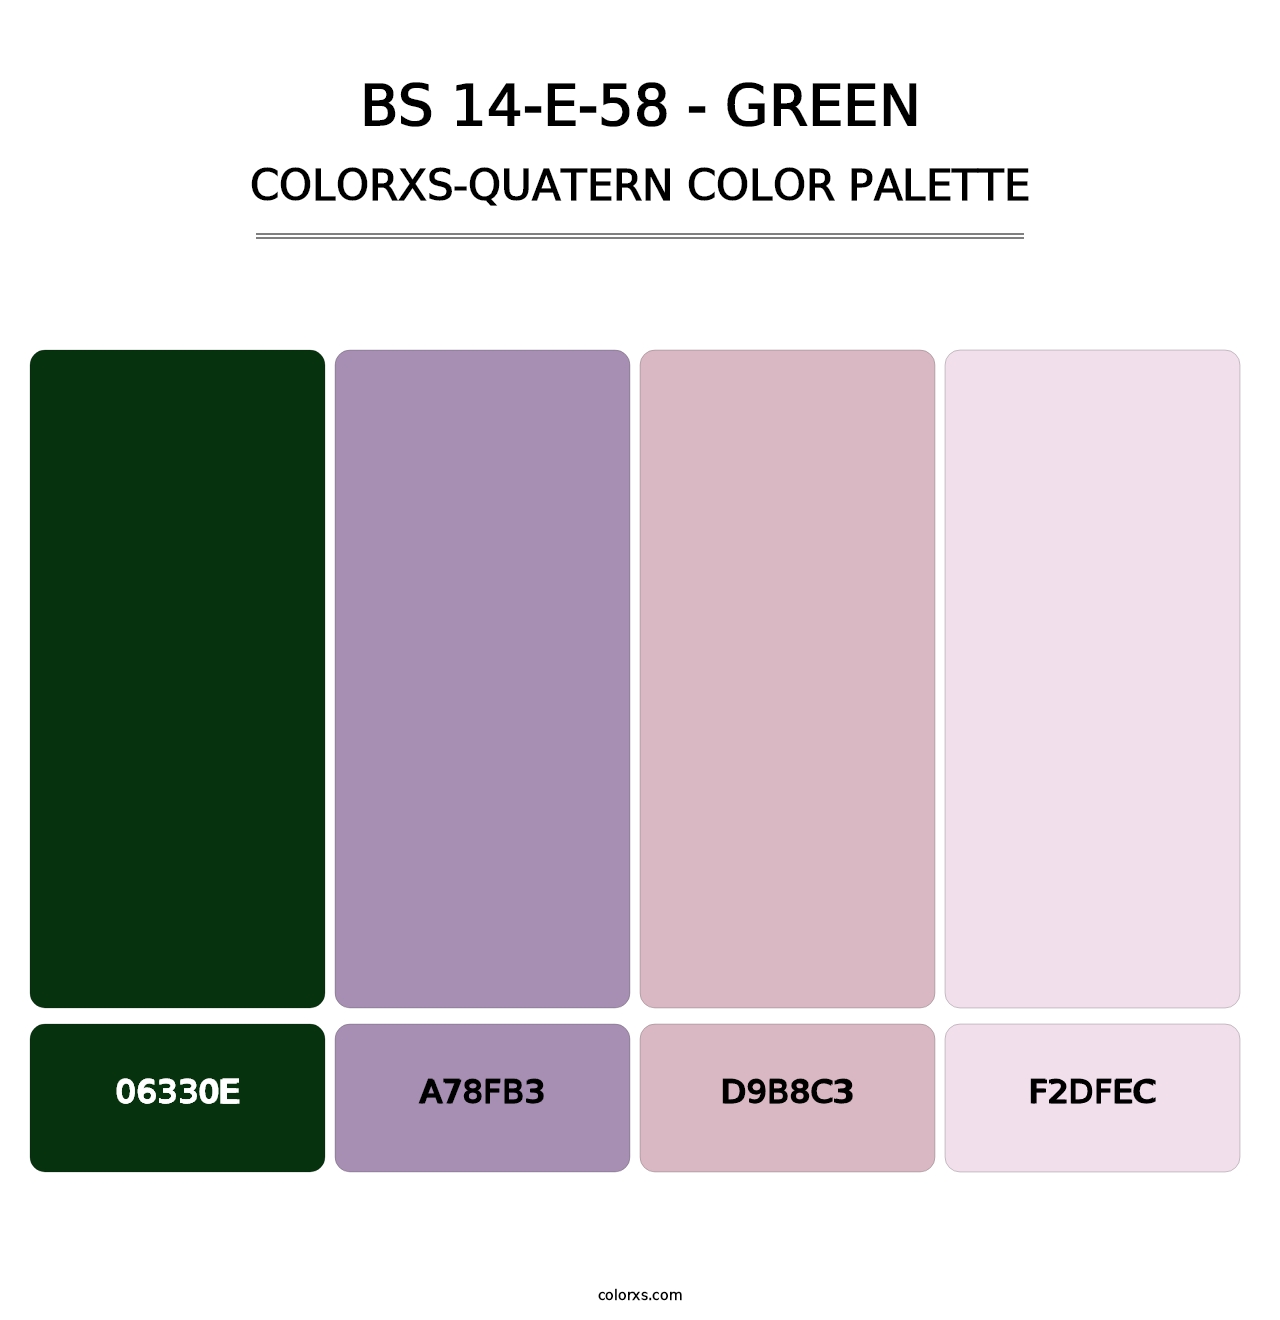 BS 14-E-58 - Green - Colorxs Quatern Palette